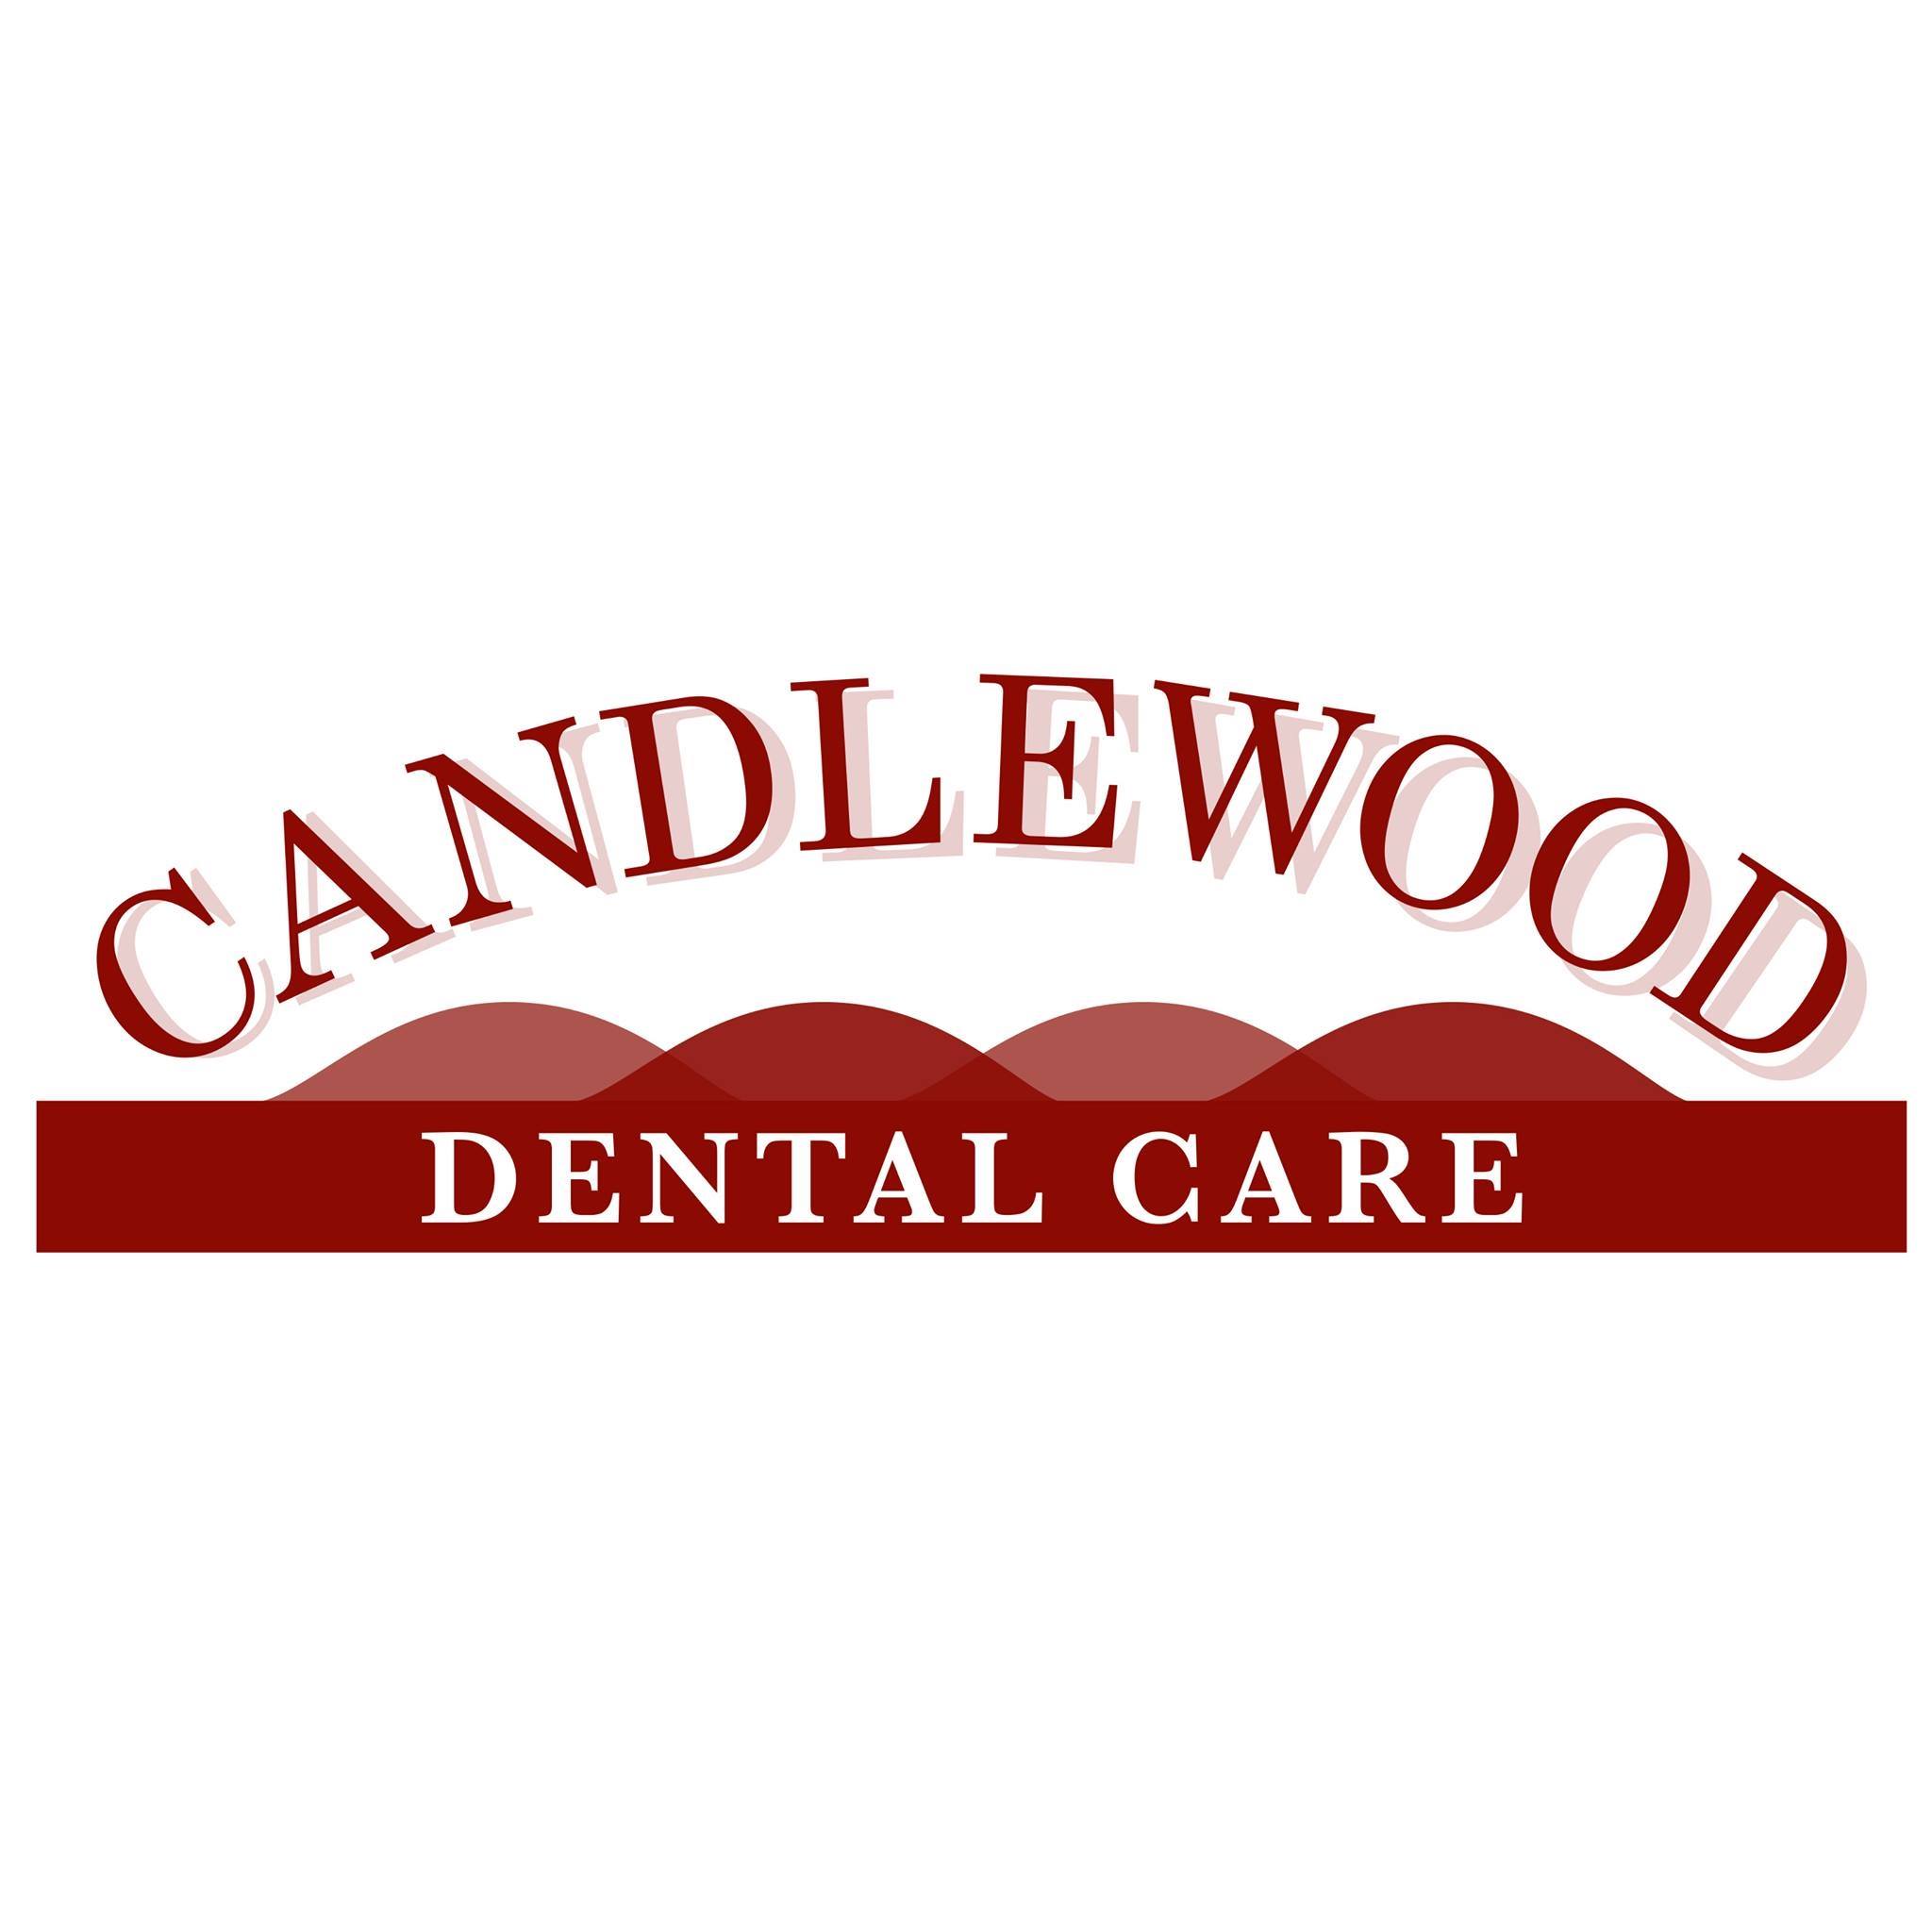 Company logo of Candlewood Dental Care